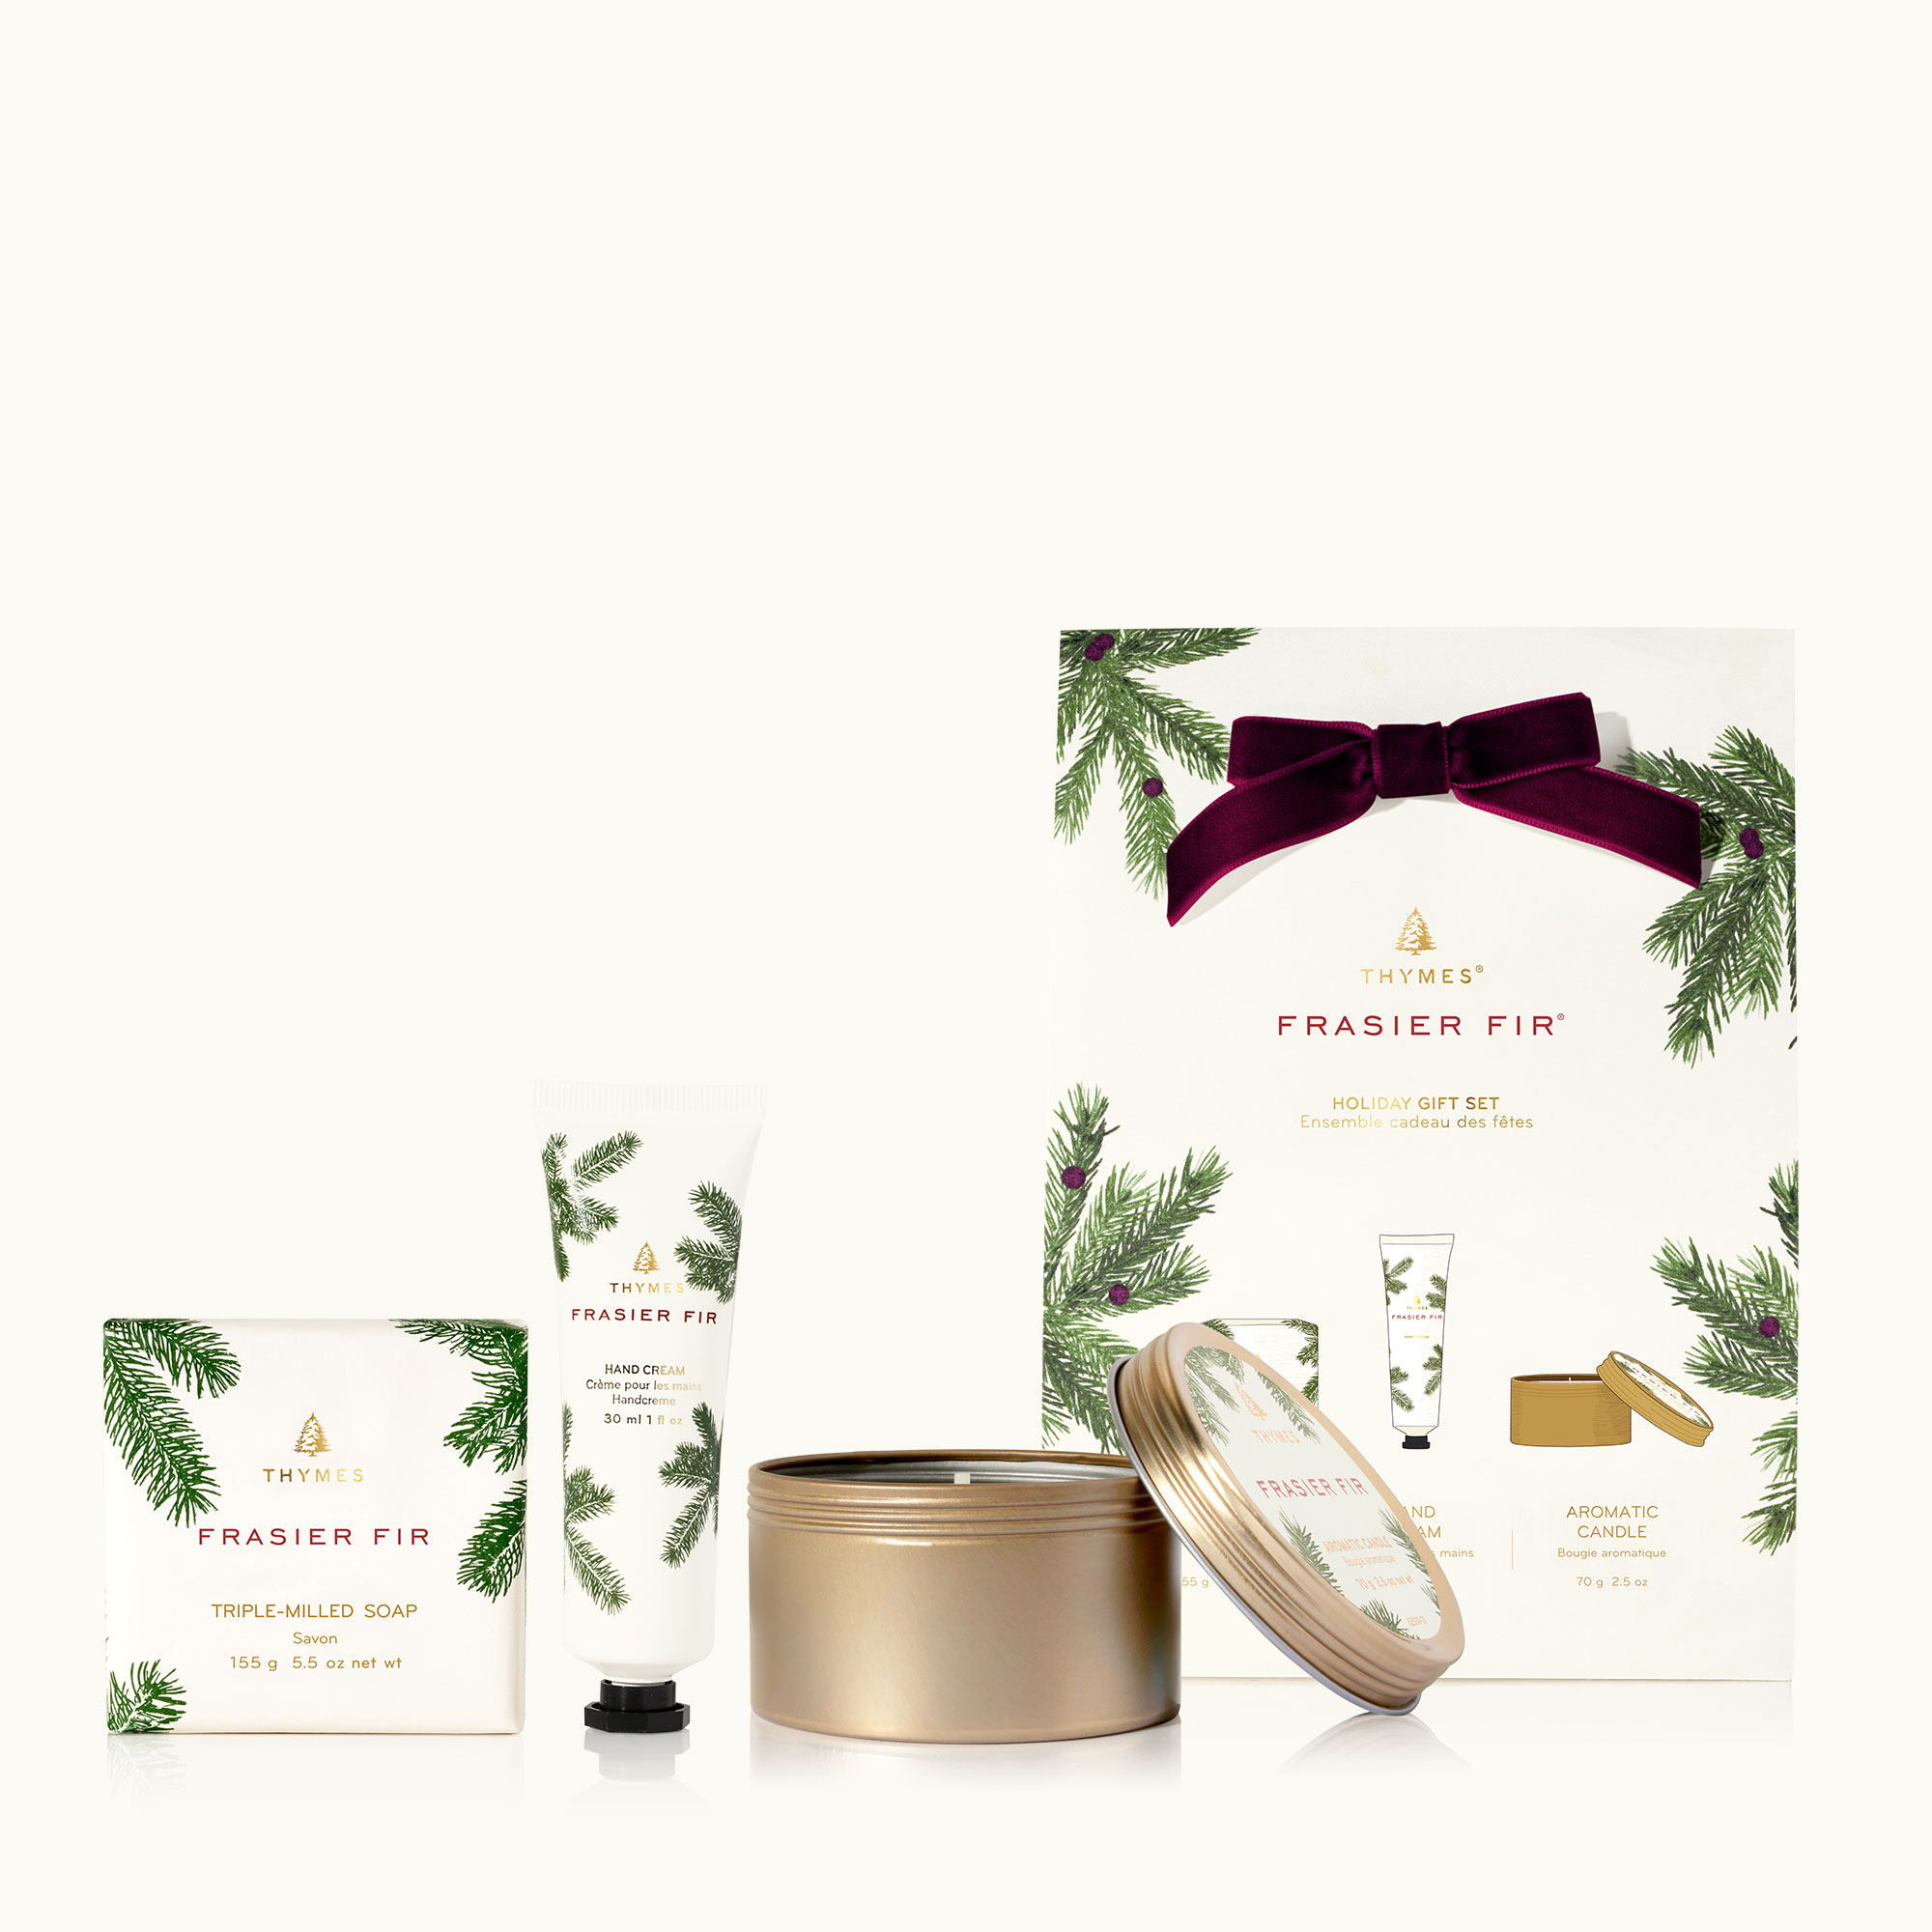 Thymes Frasier Fir Novelty Holiday Gift Set | Home Fragrance